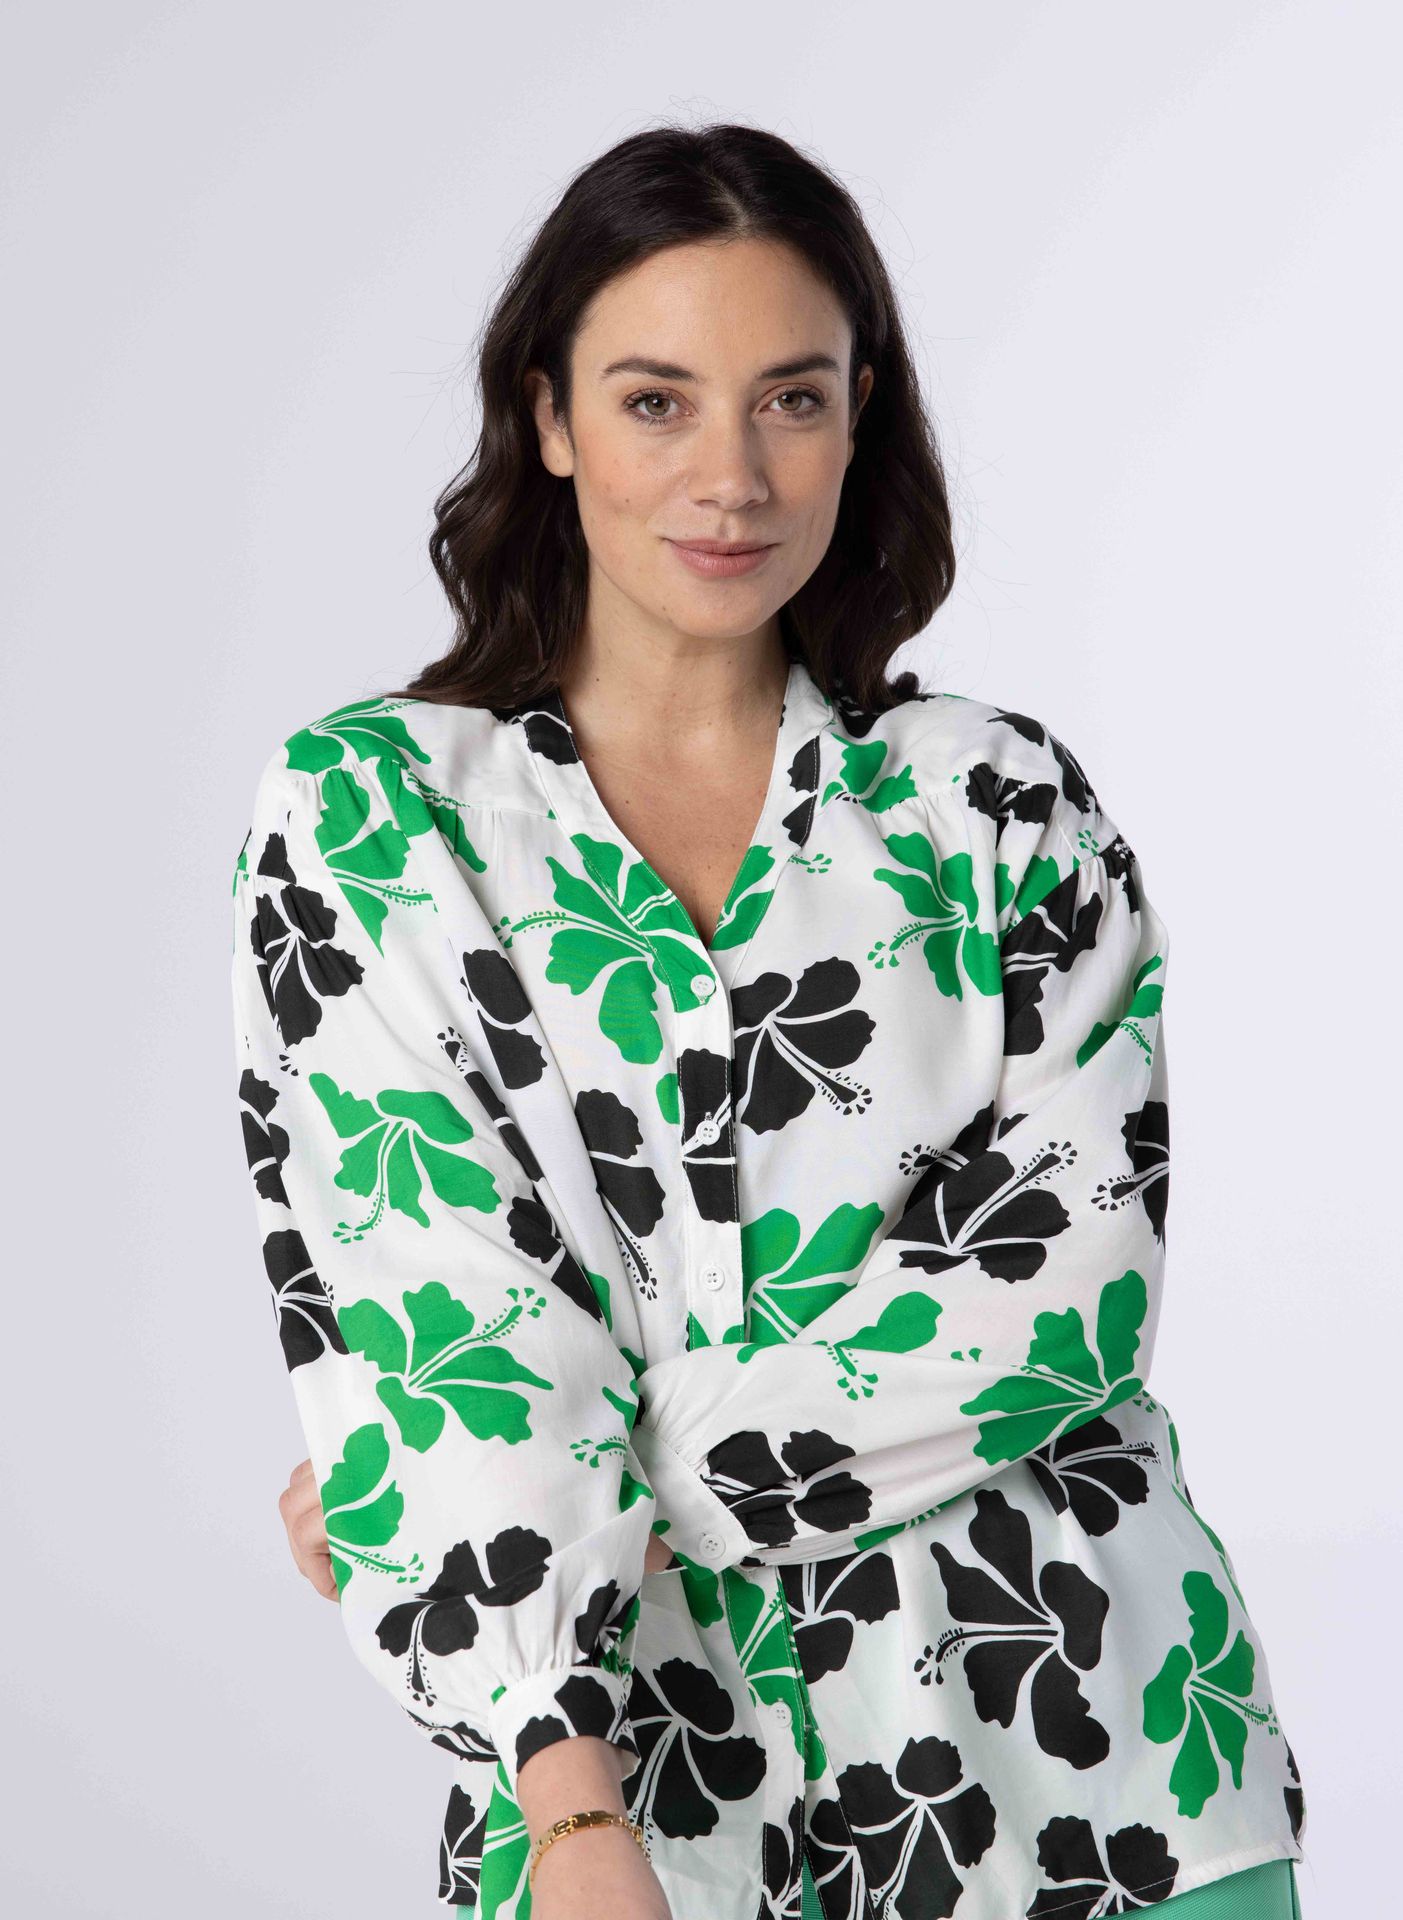 Norah Meerkleurige blouse green multicolor 213509-520